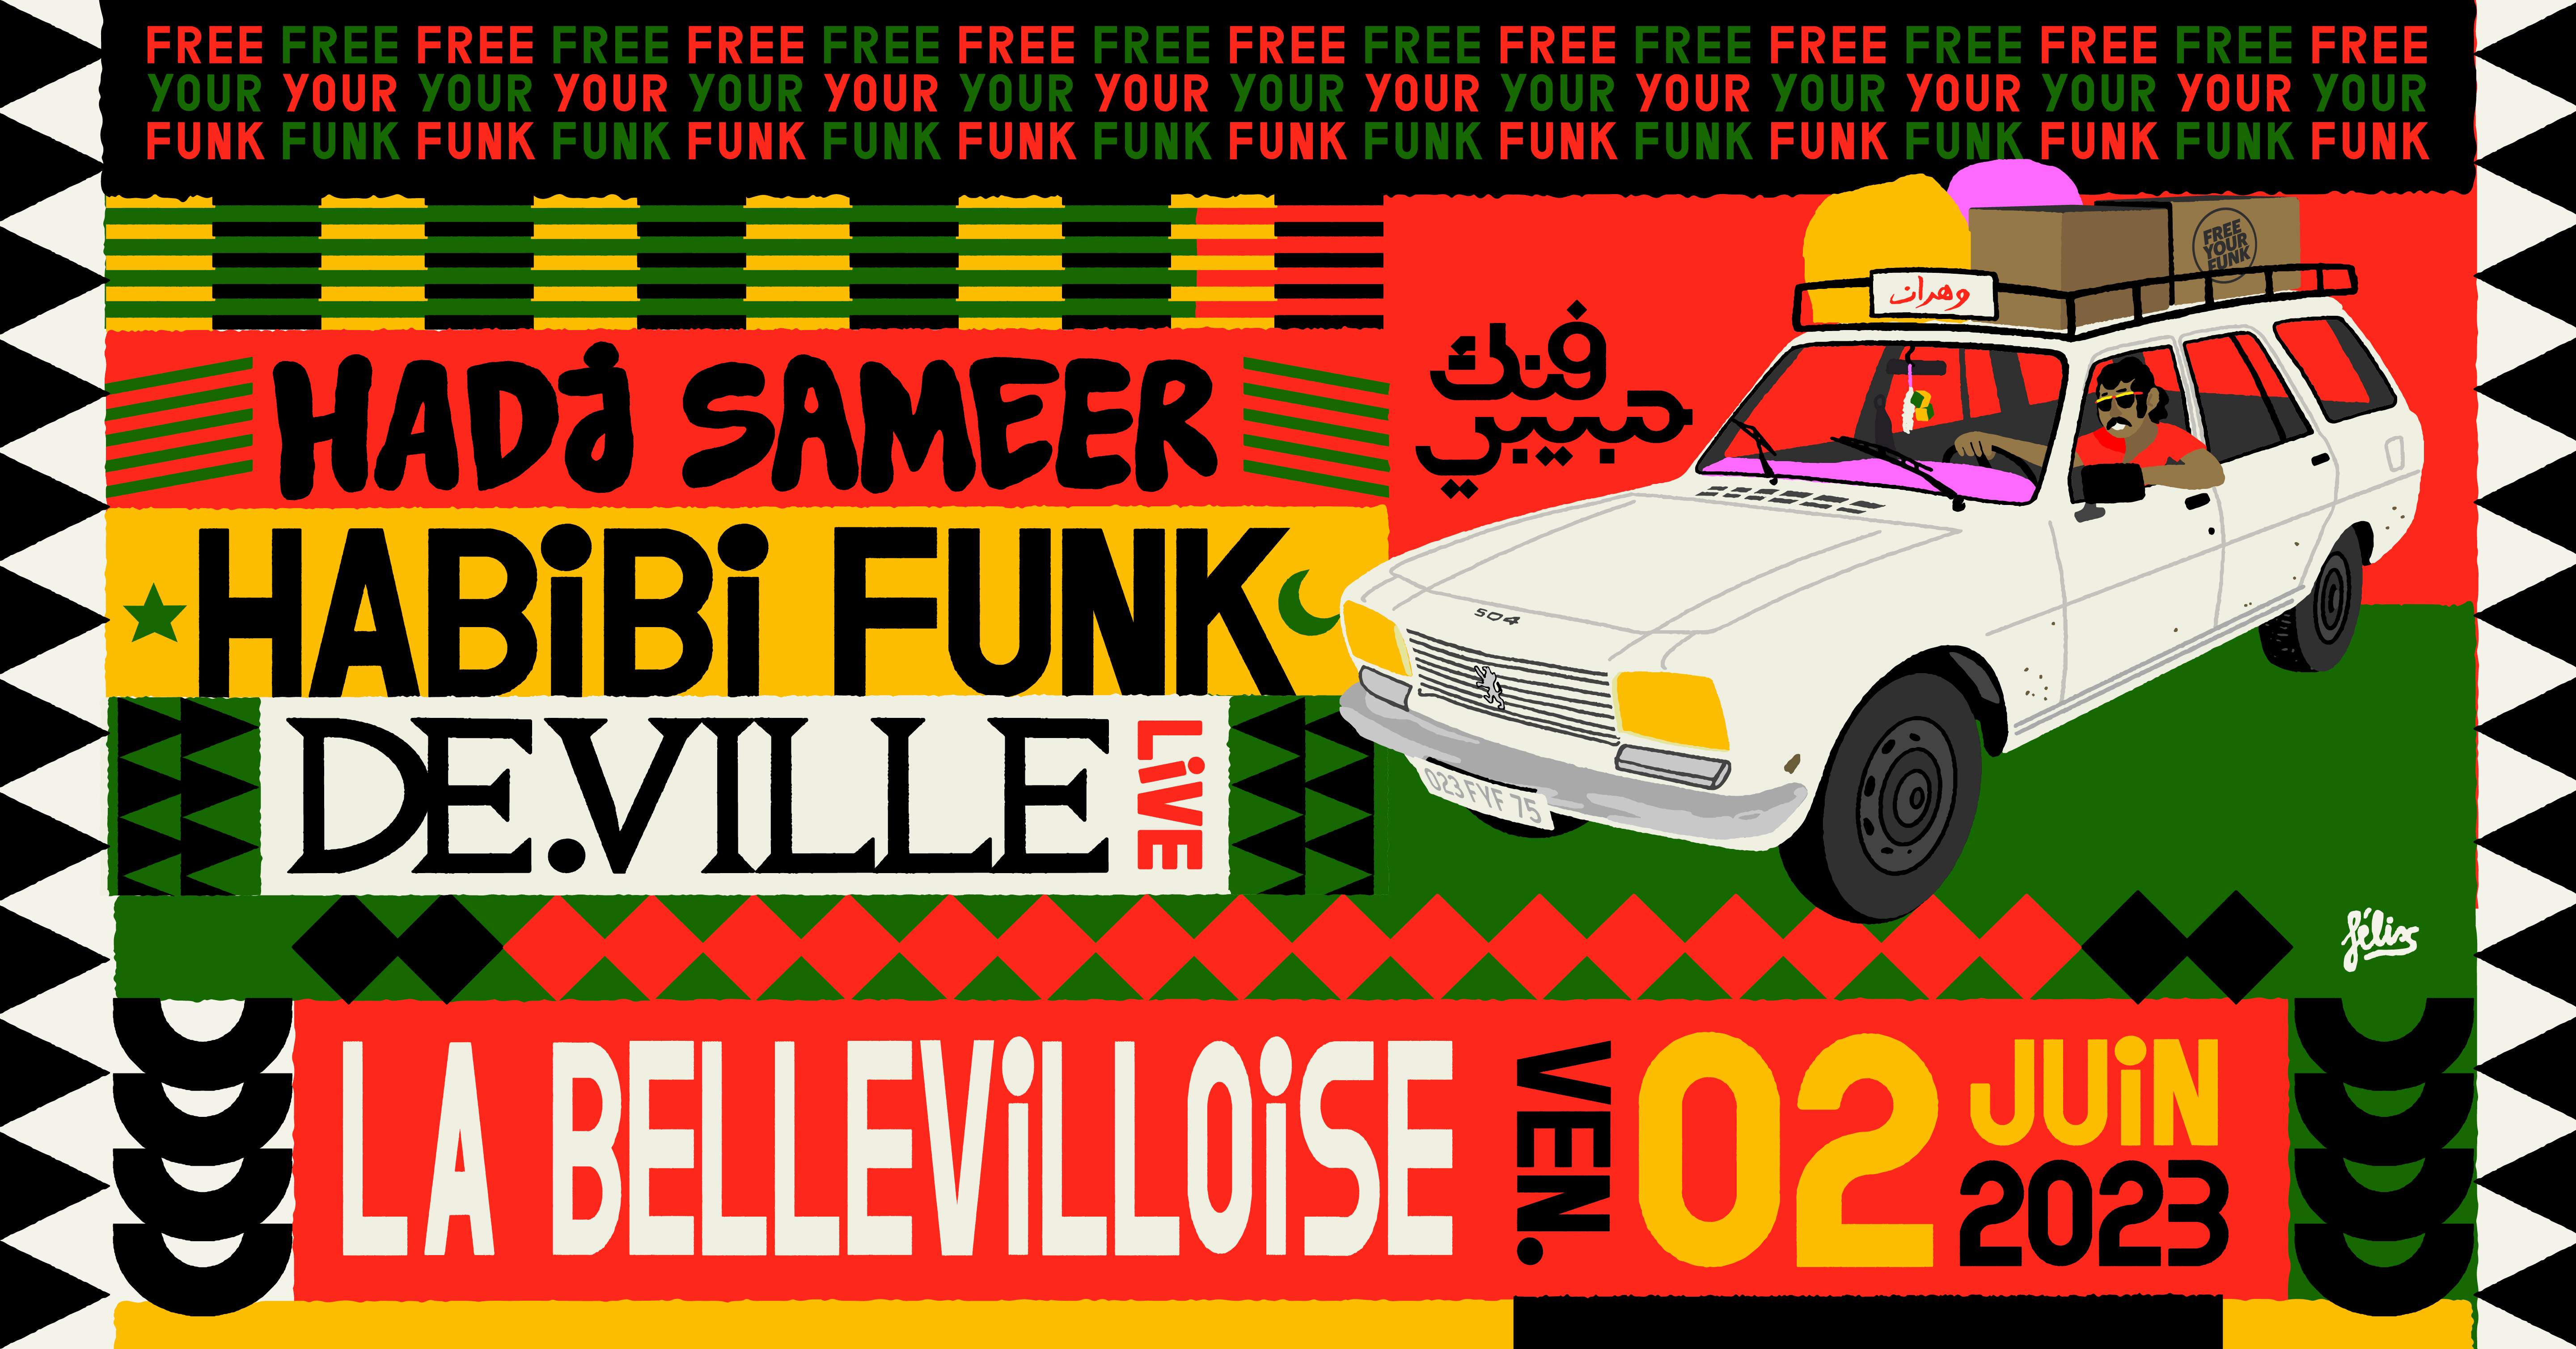 Free Your Funk: Habibi Funk, Hadj Sameer, De.Ville (live) - Página trasera